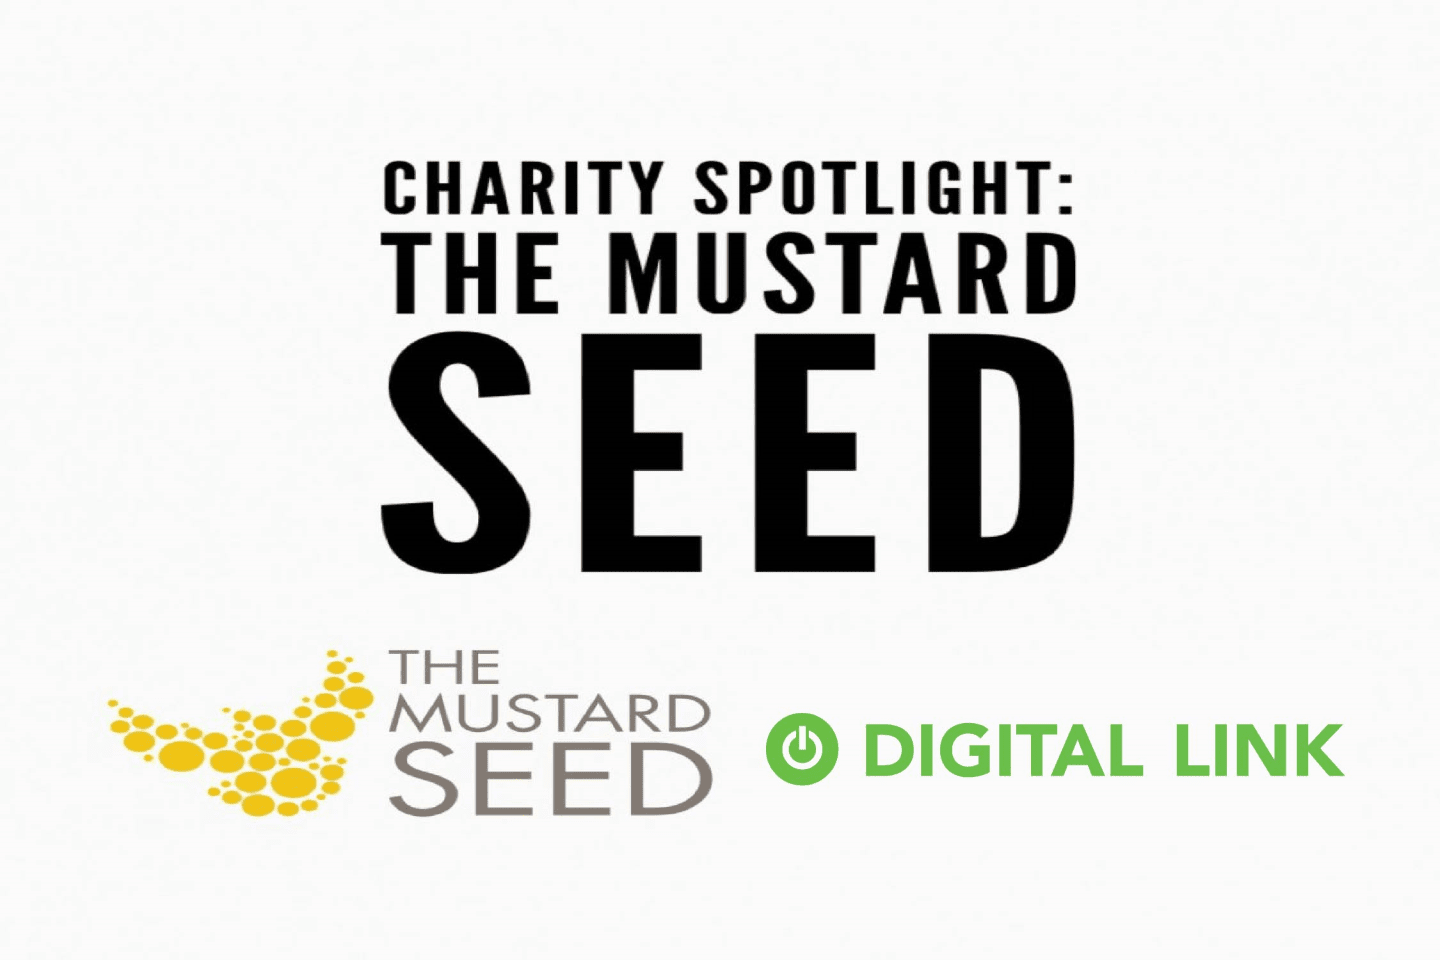 The Mustard Seed Charity Spotlight